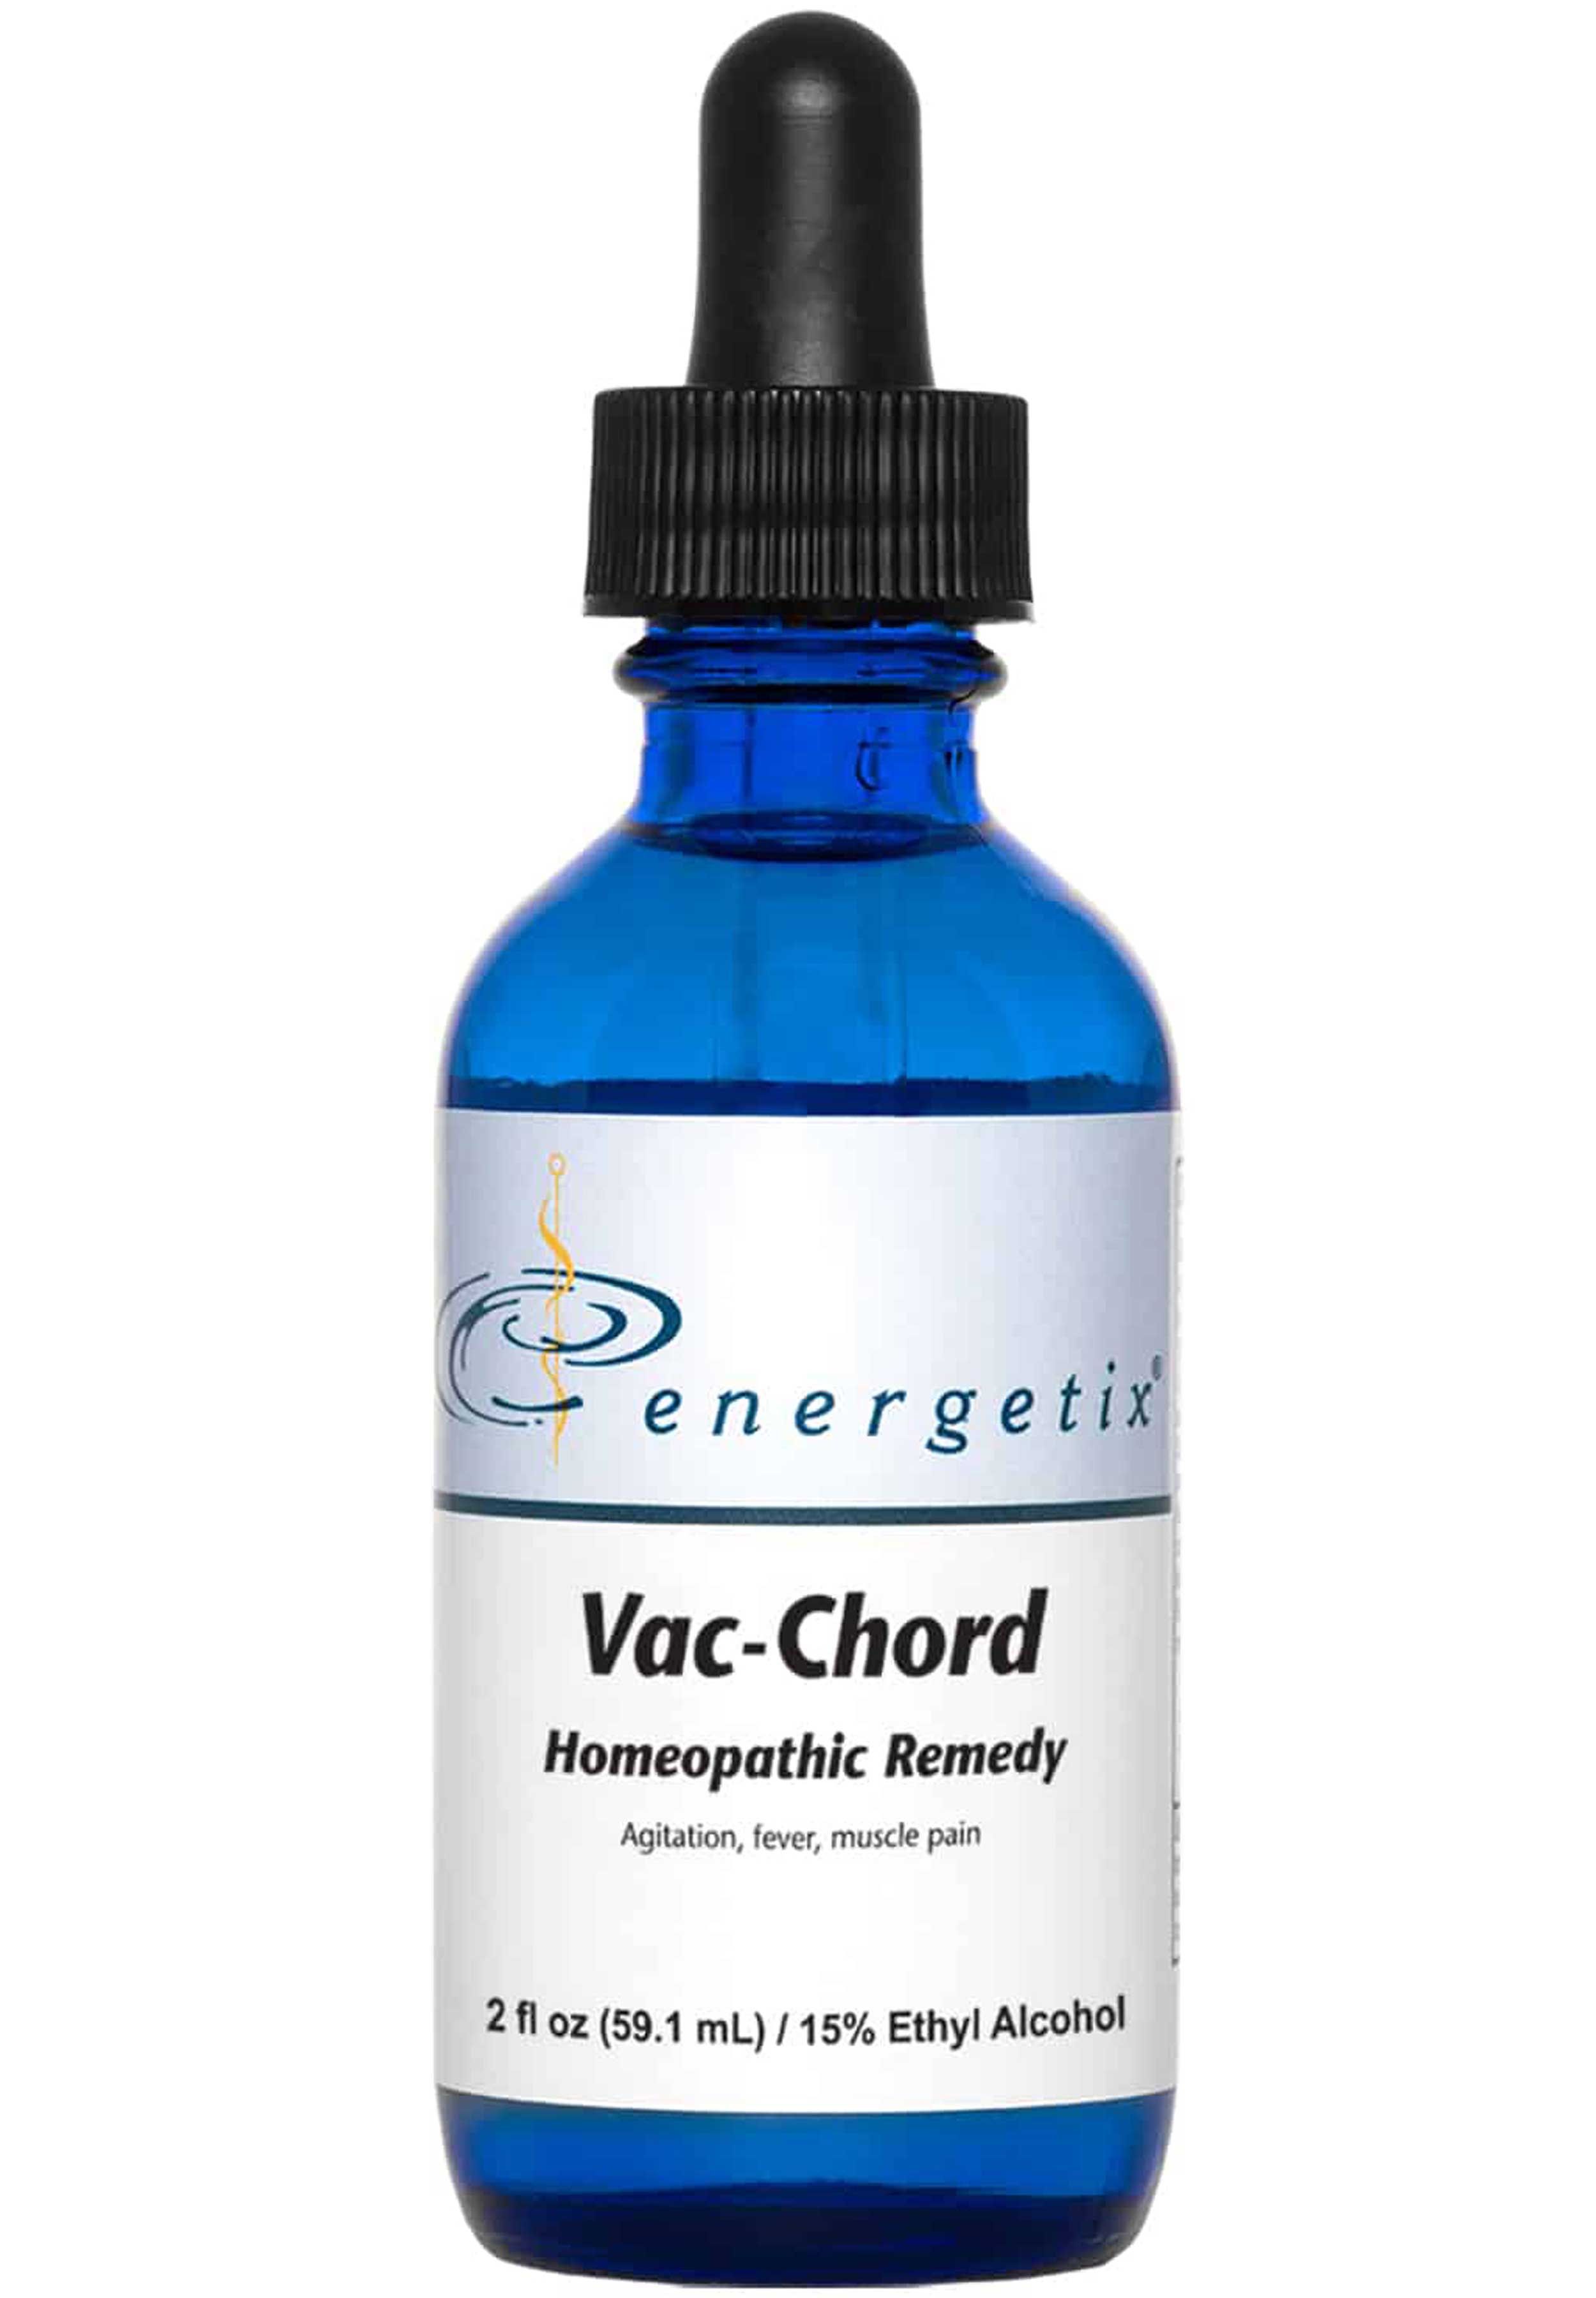 Energetix Vac-Chord